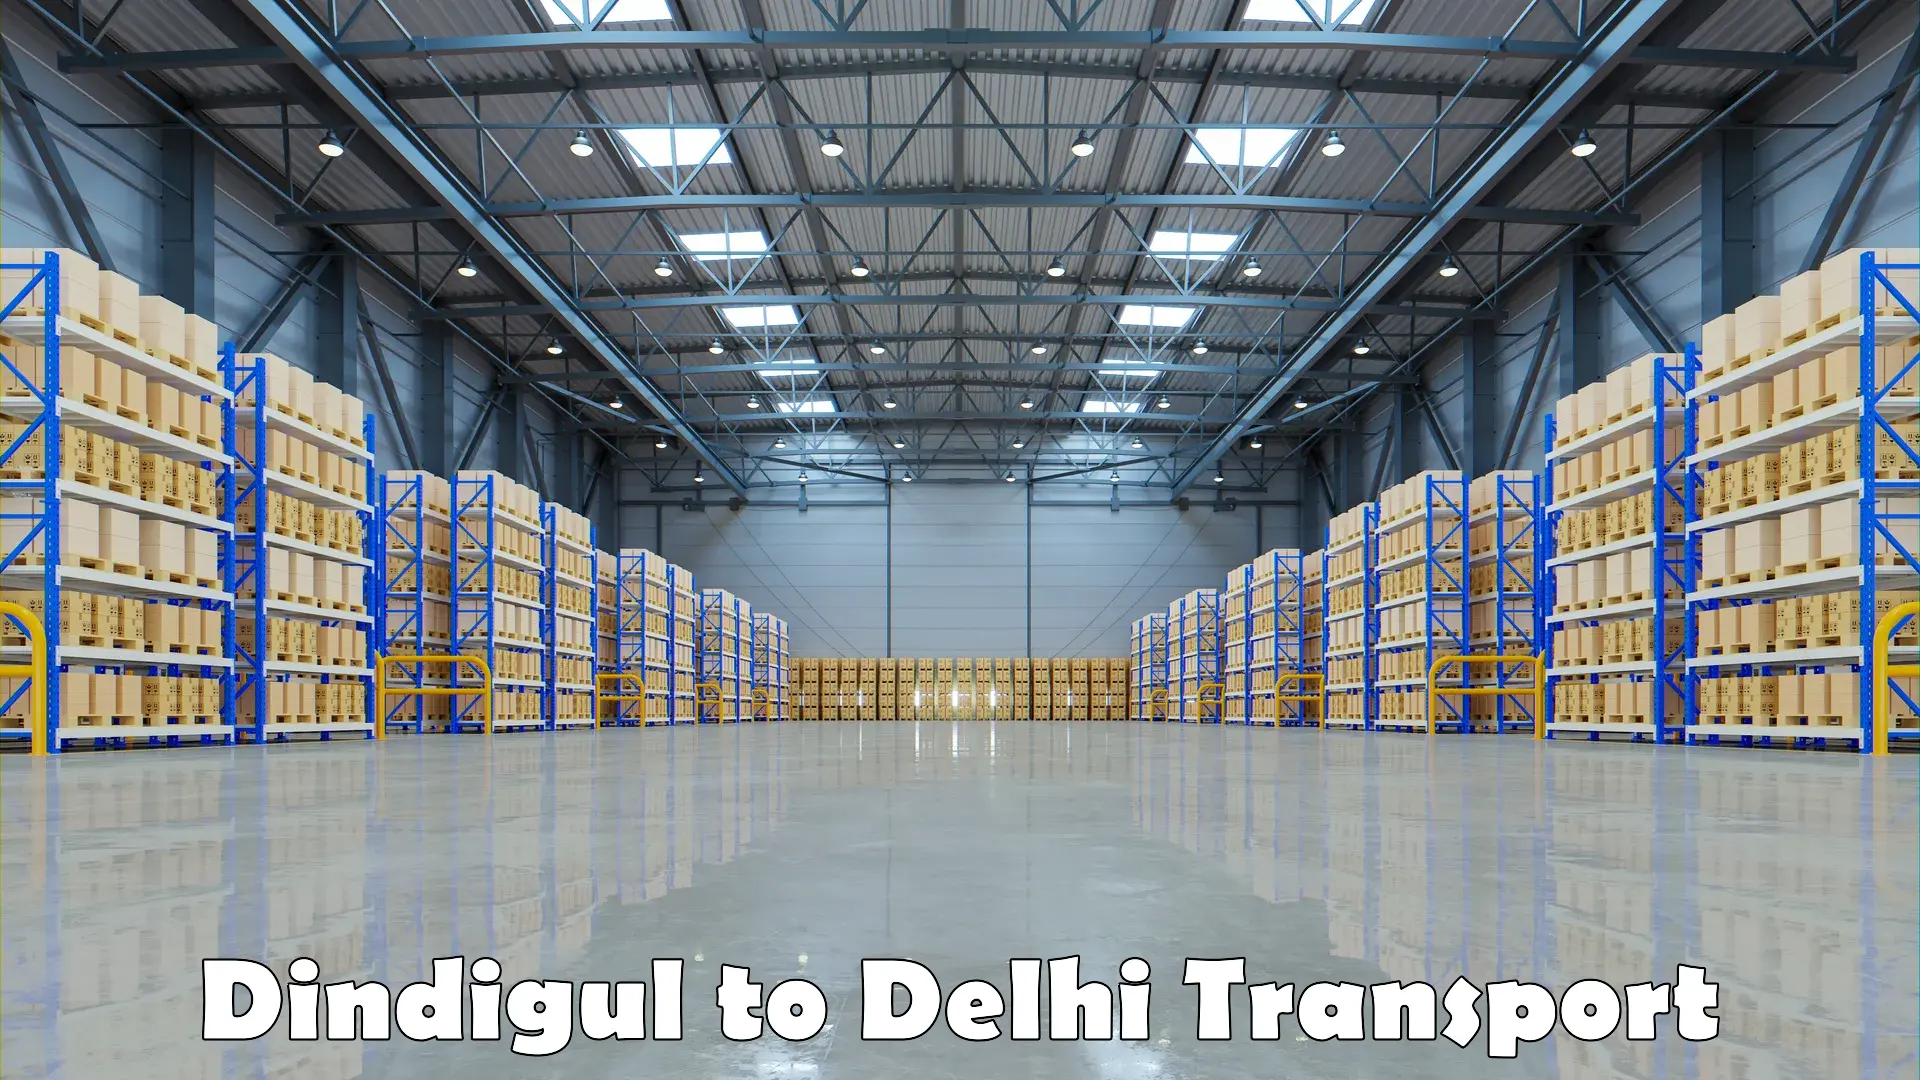 Transport in sharing Dindigul to Delhi